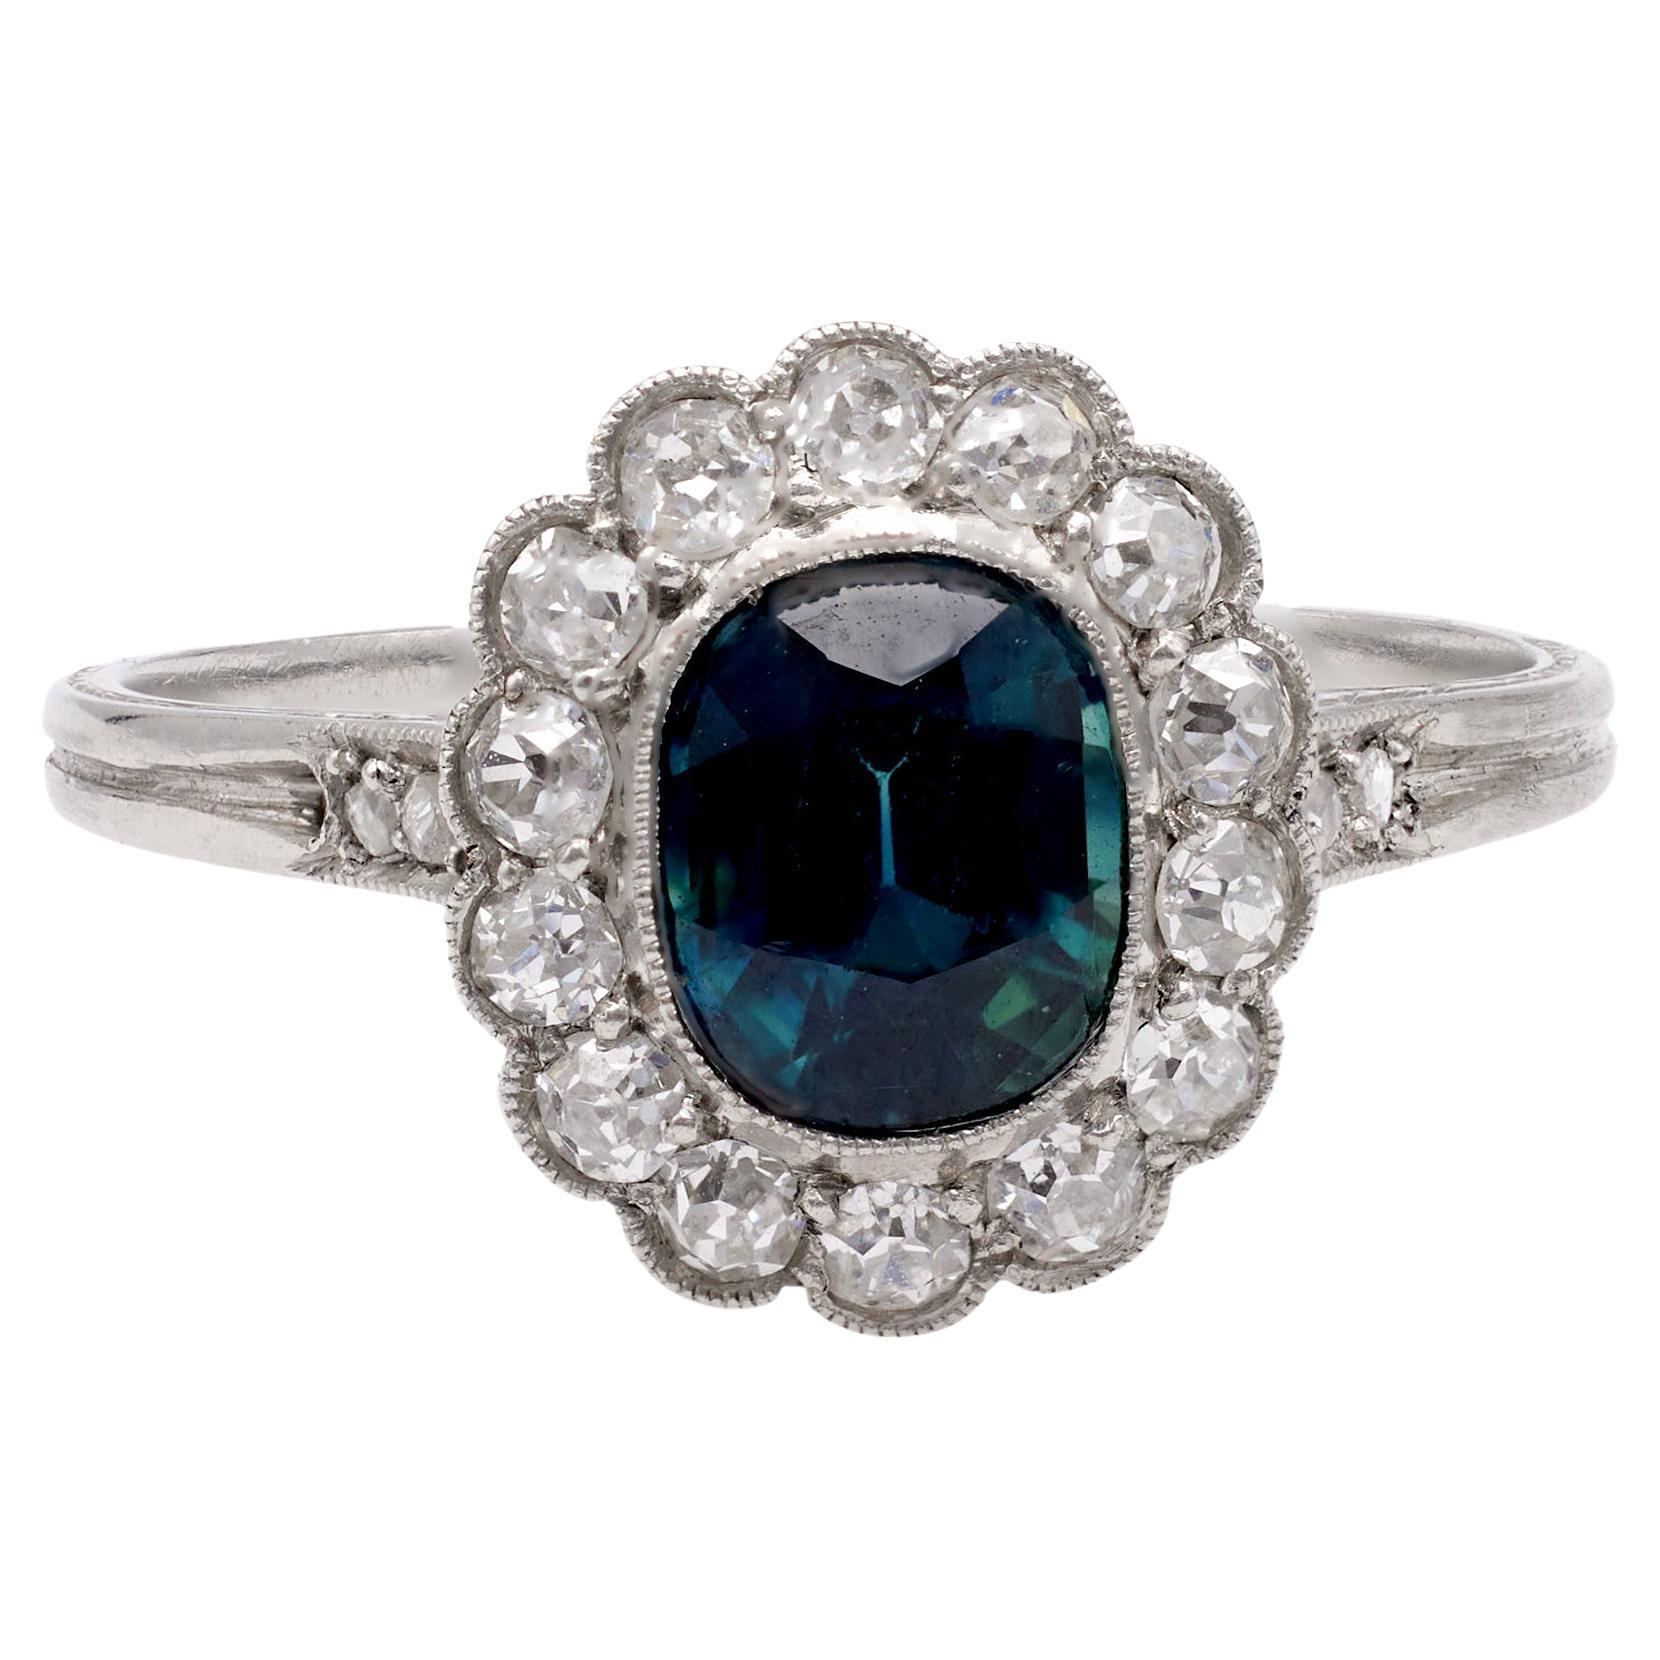 Art Deco Sapphire and Diamond Platinum Cluster Ring